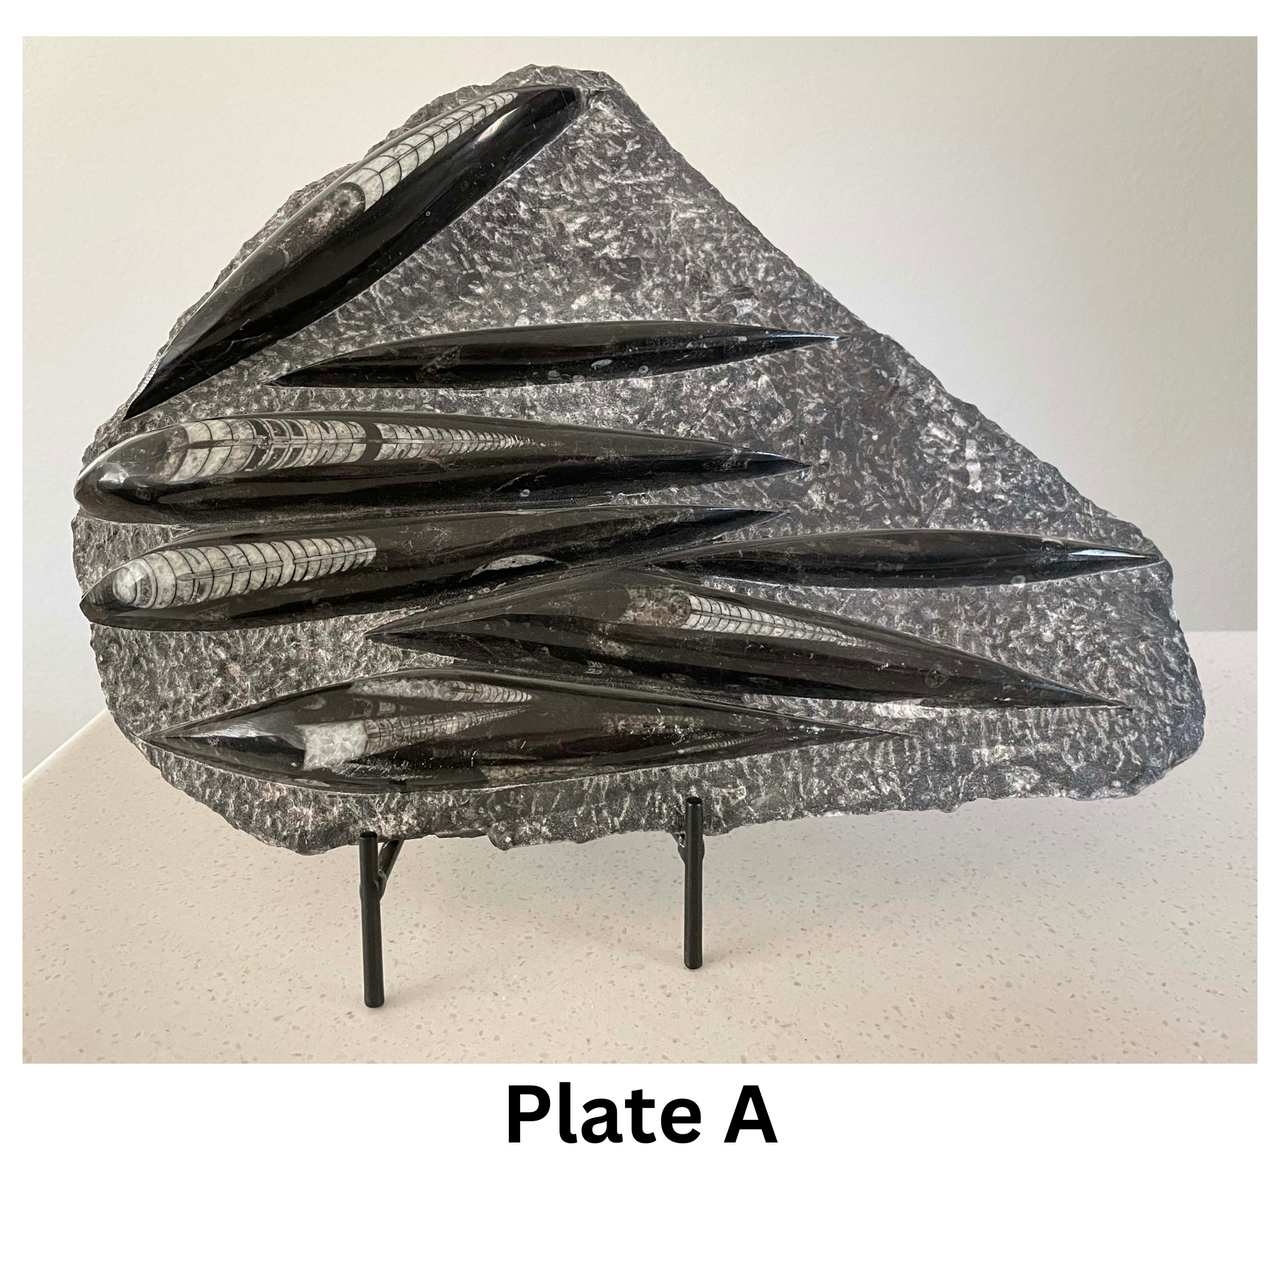 Orthoceras and Ammonite Composite Plate